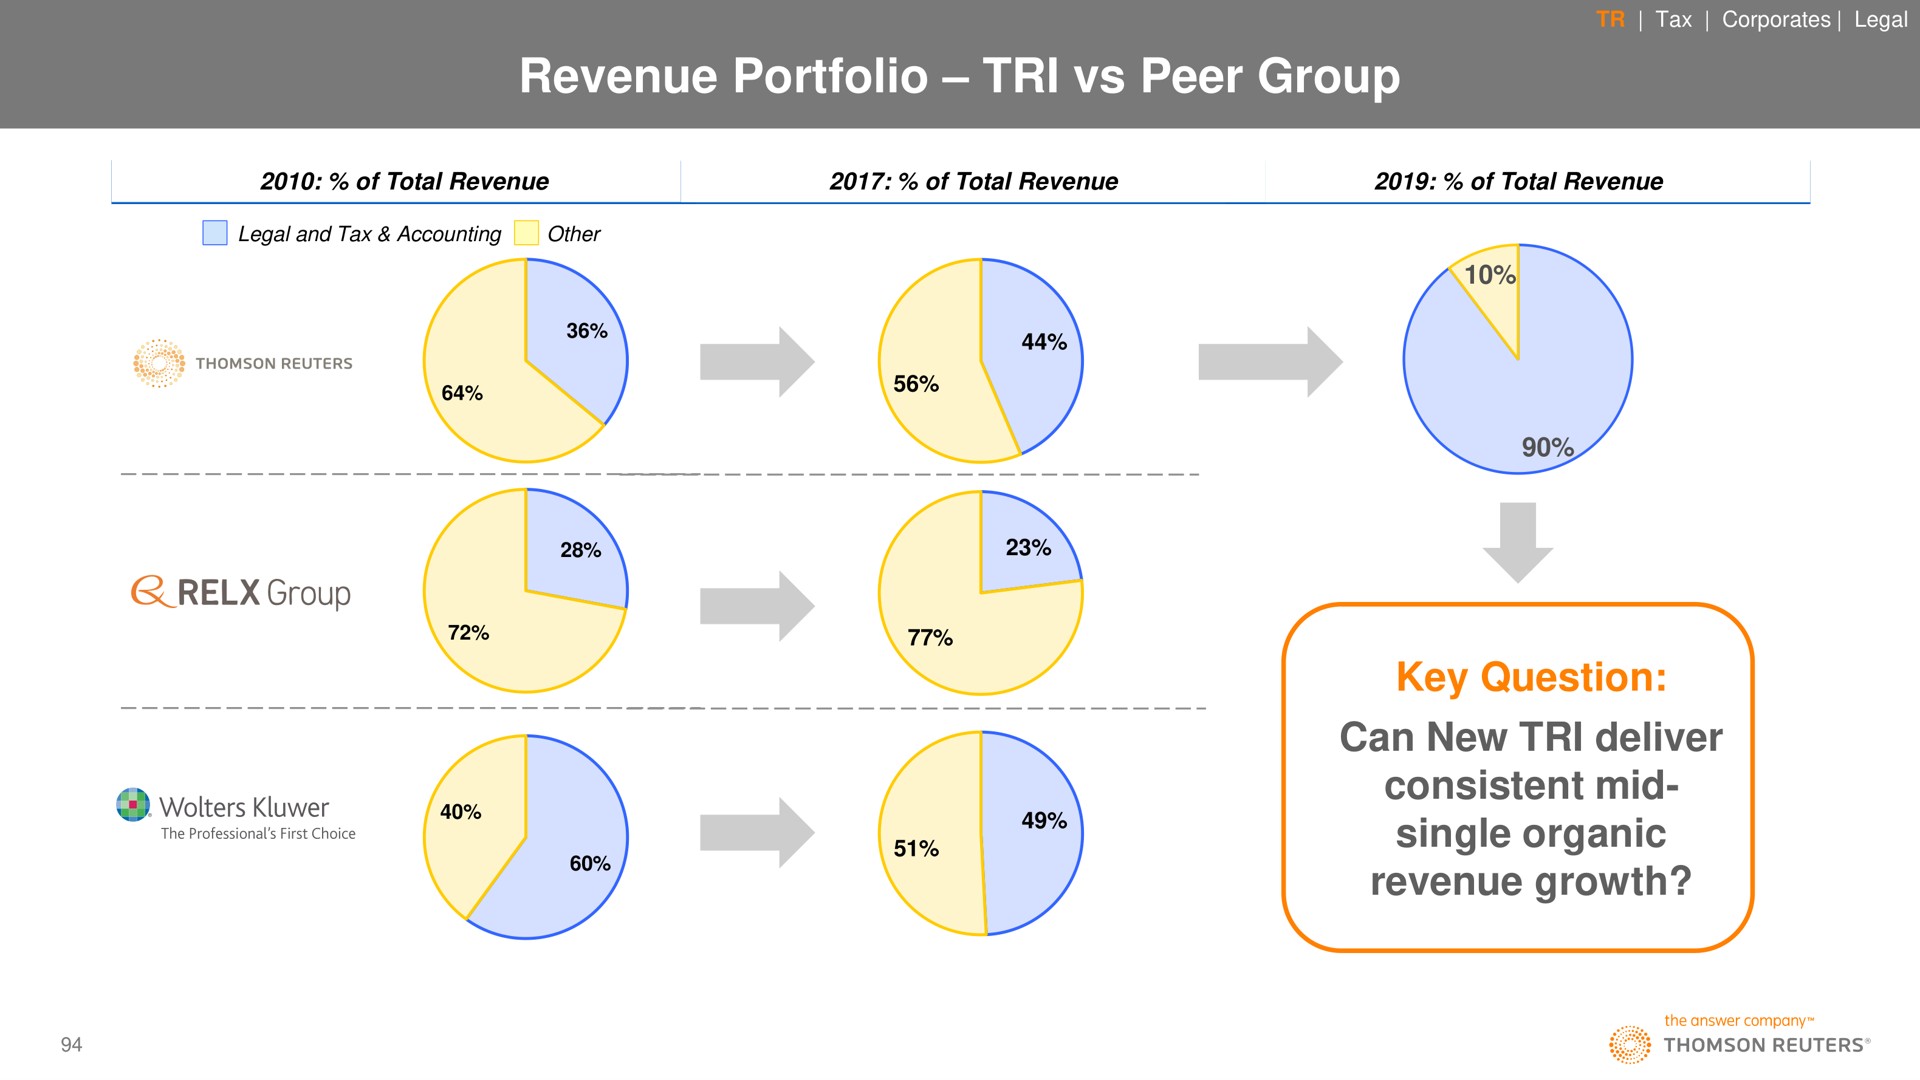 revenue portfolio tri peer group key question can new tri deliver consistent mid single organic revenue growth | Thomson Reuters